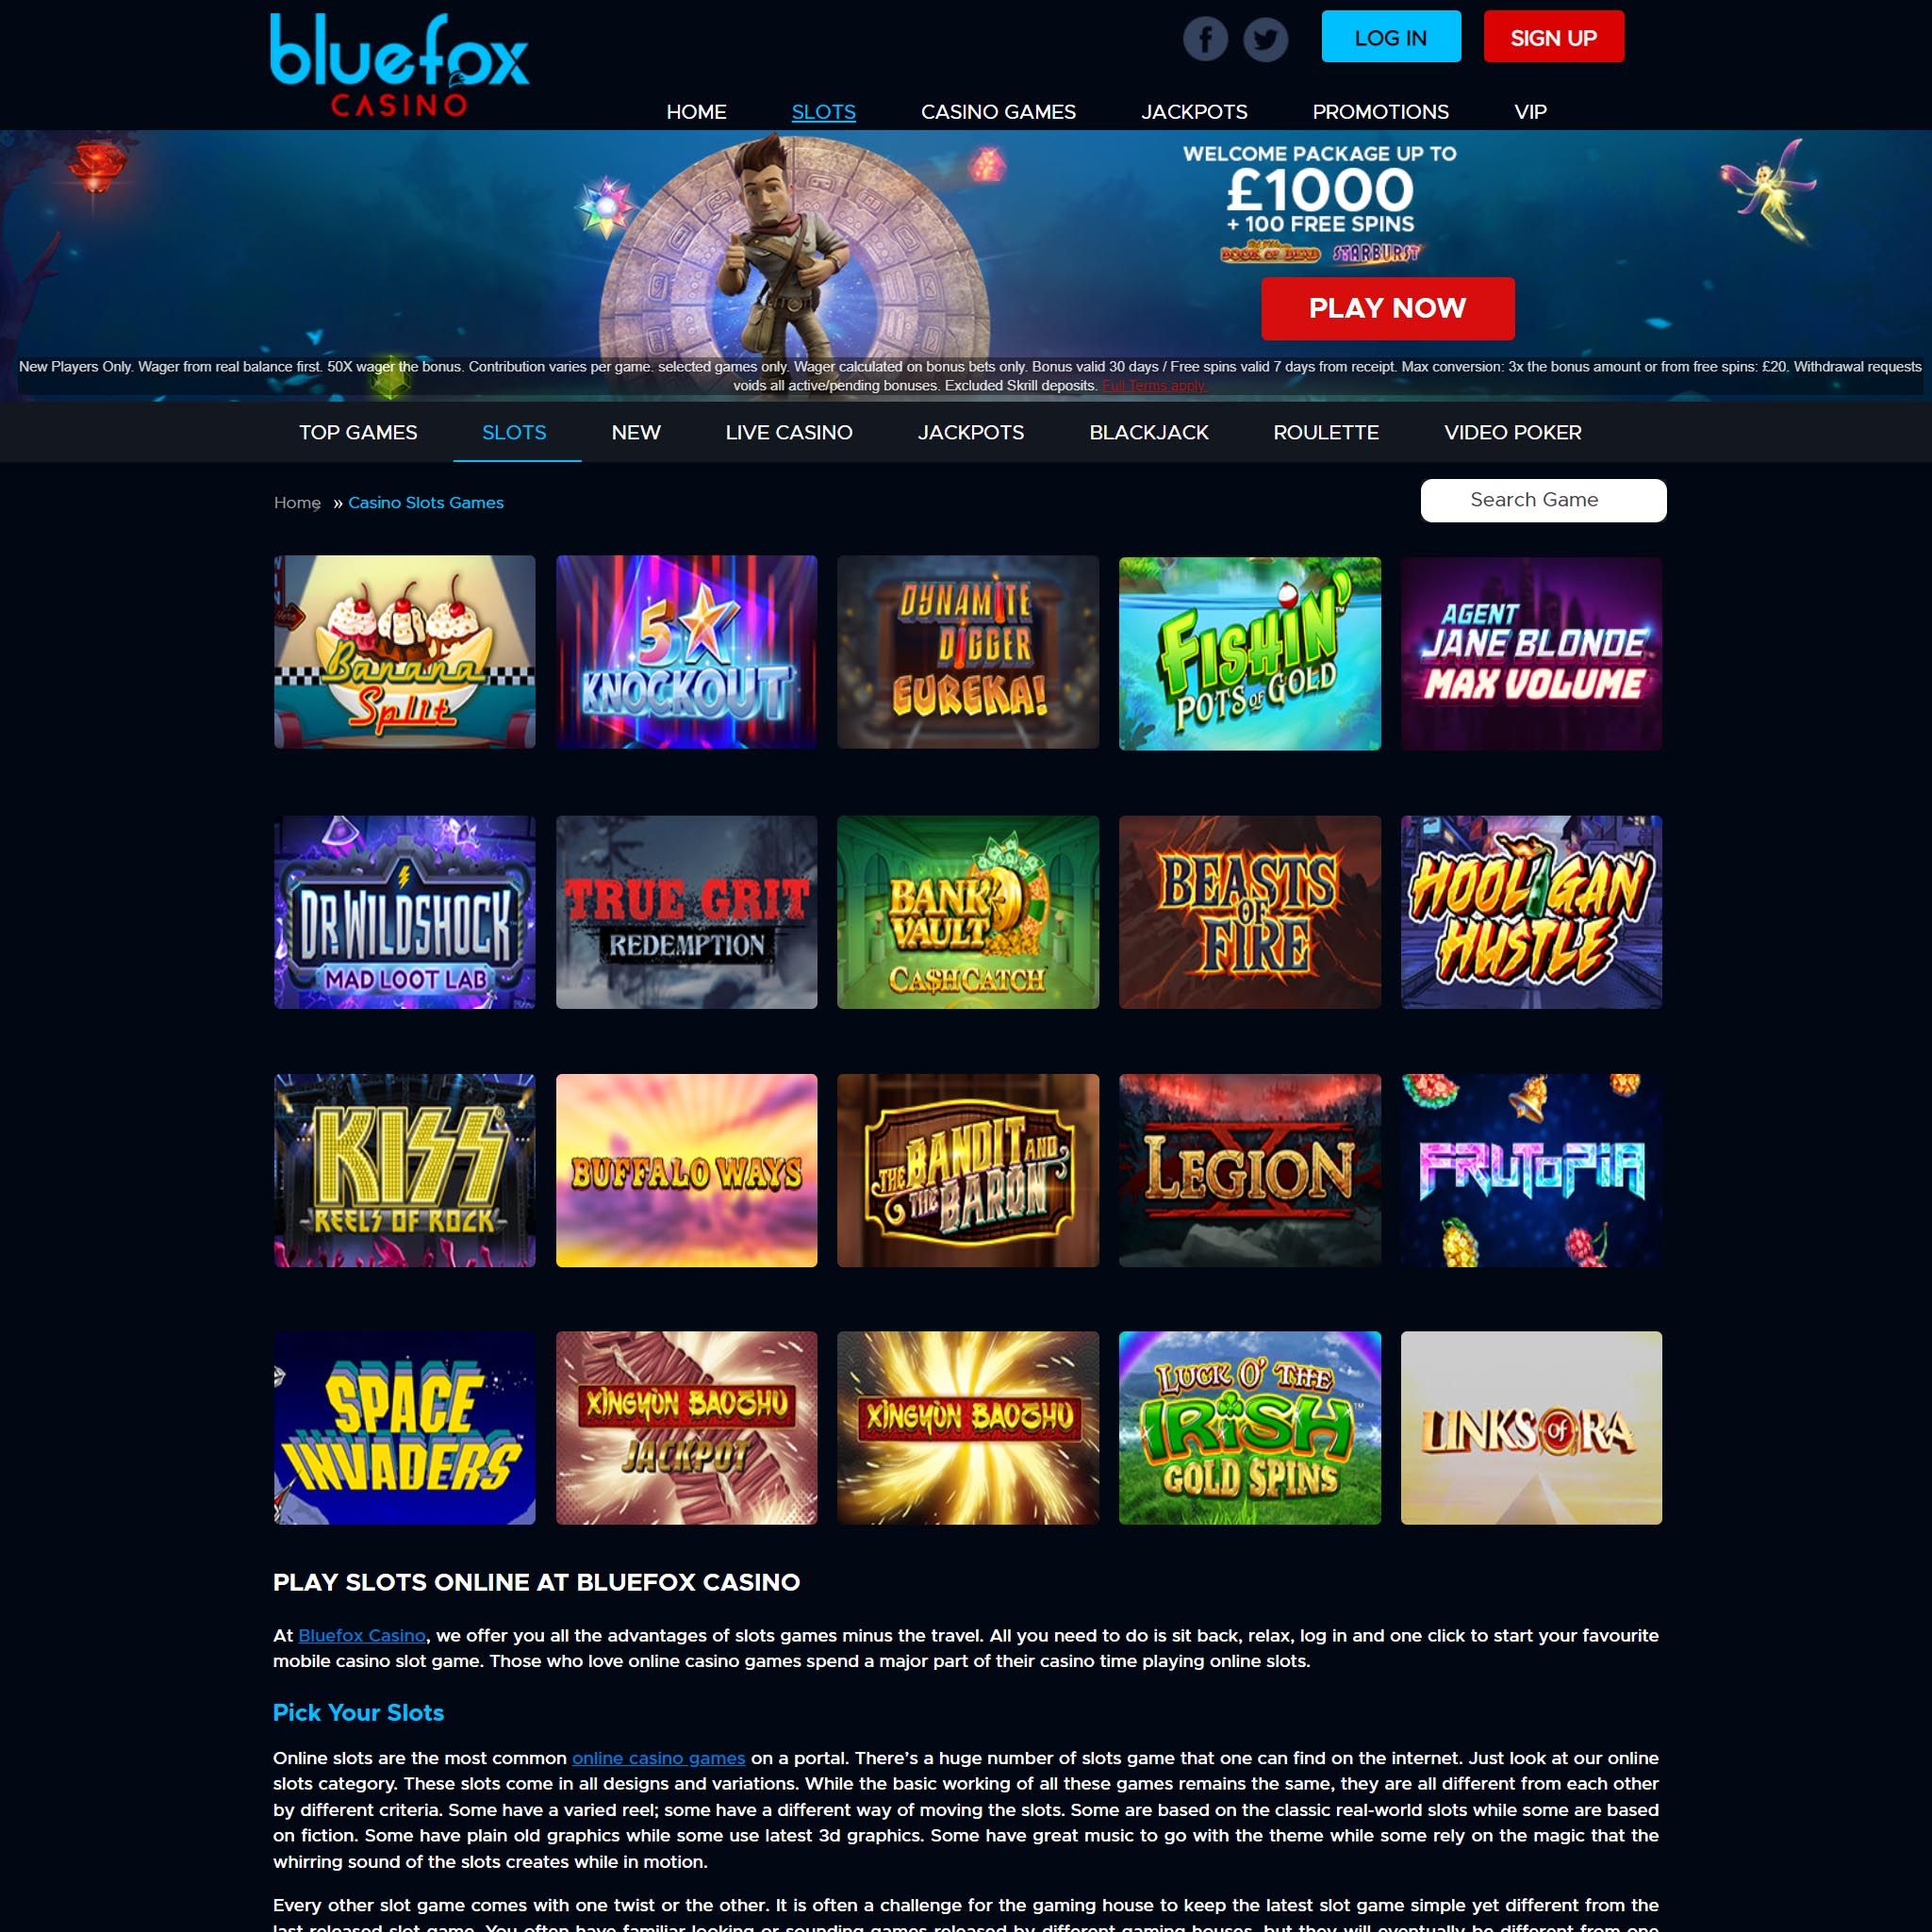 BlueFox Casino full games catalogue